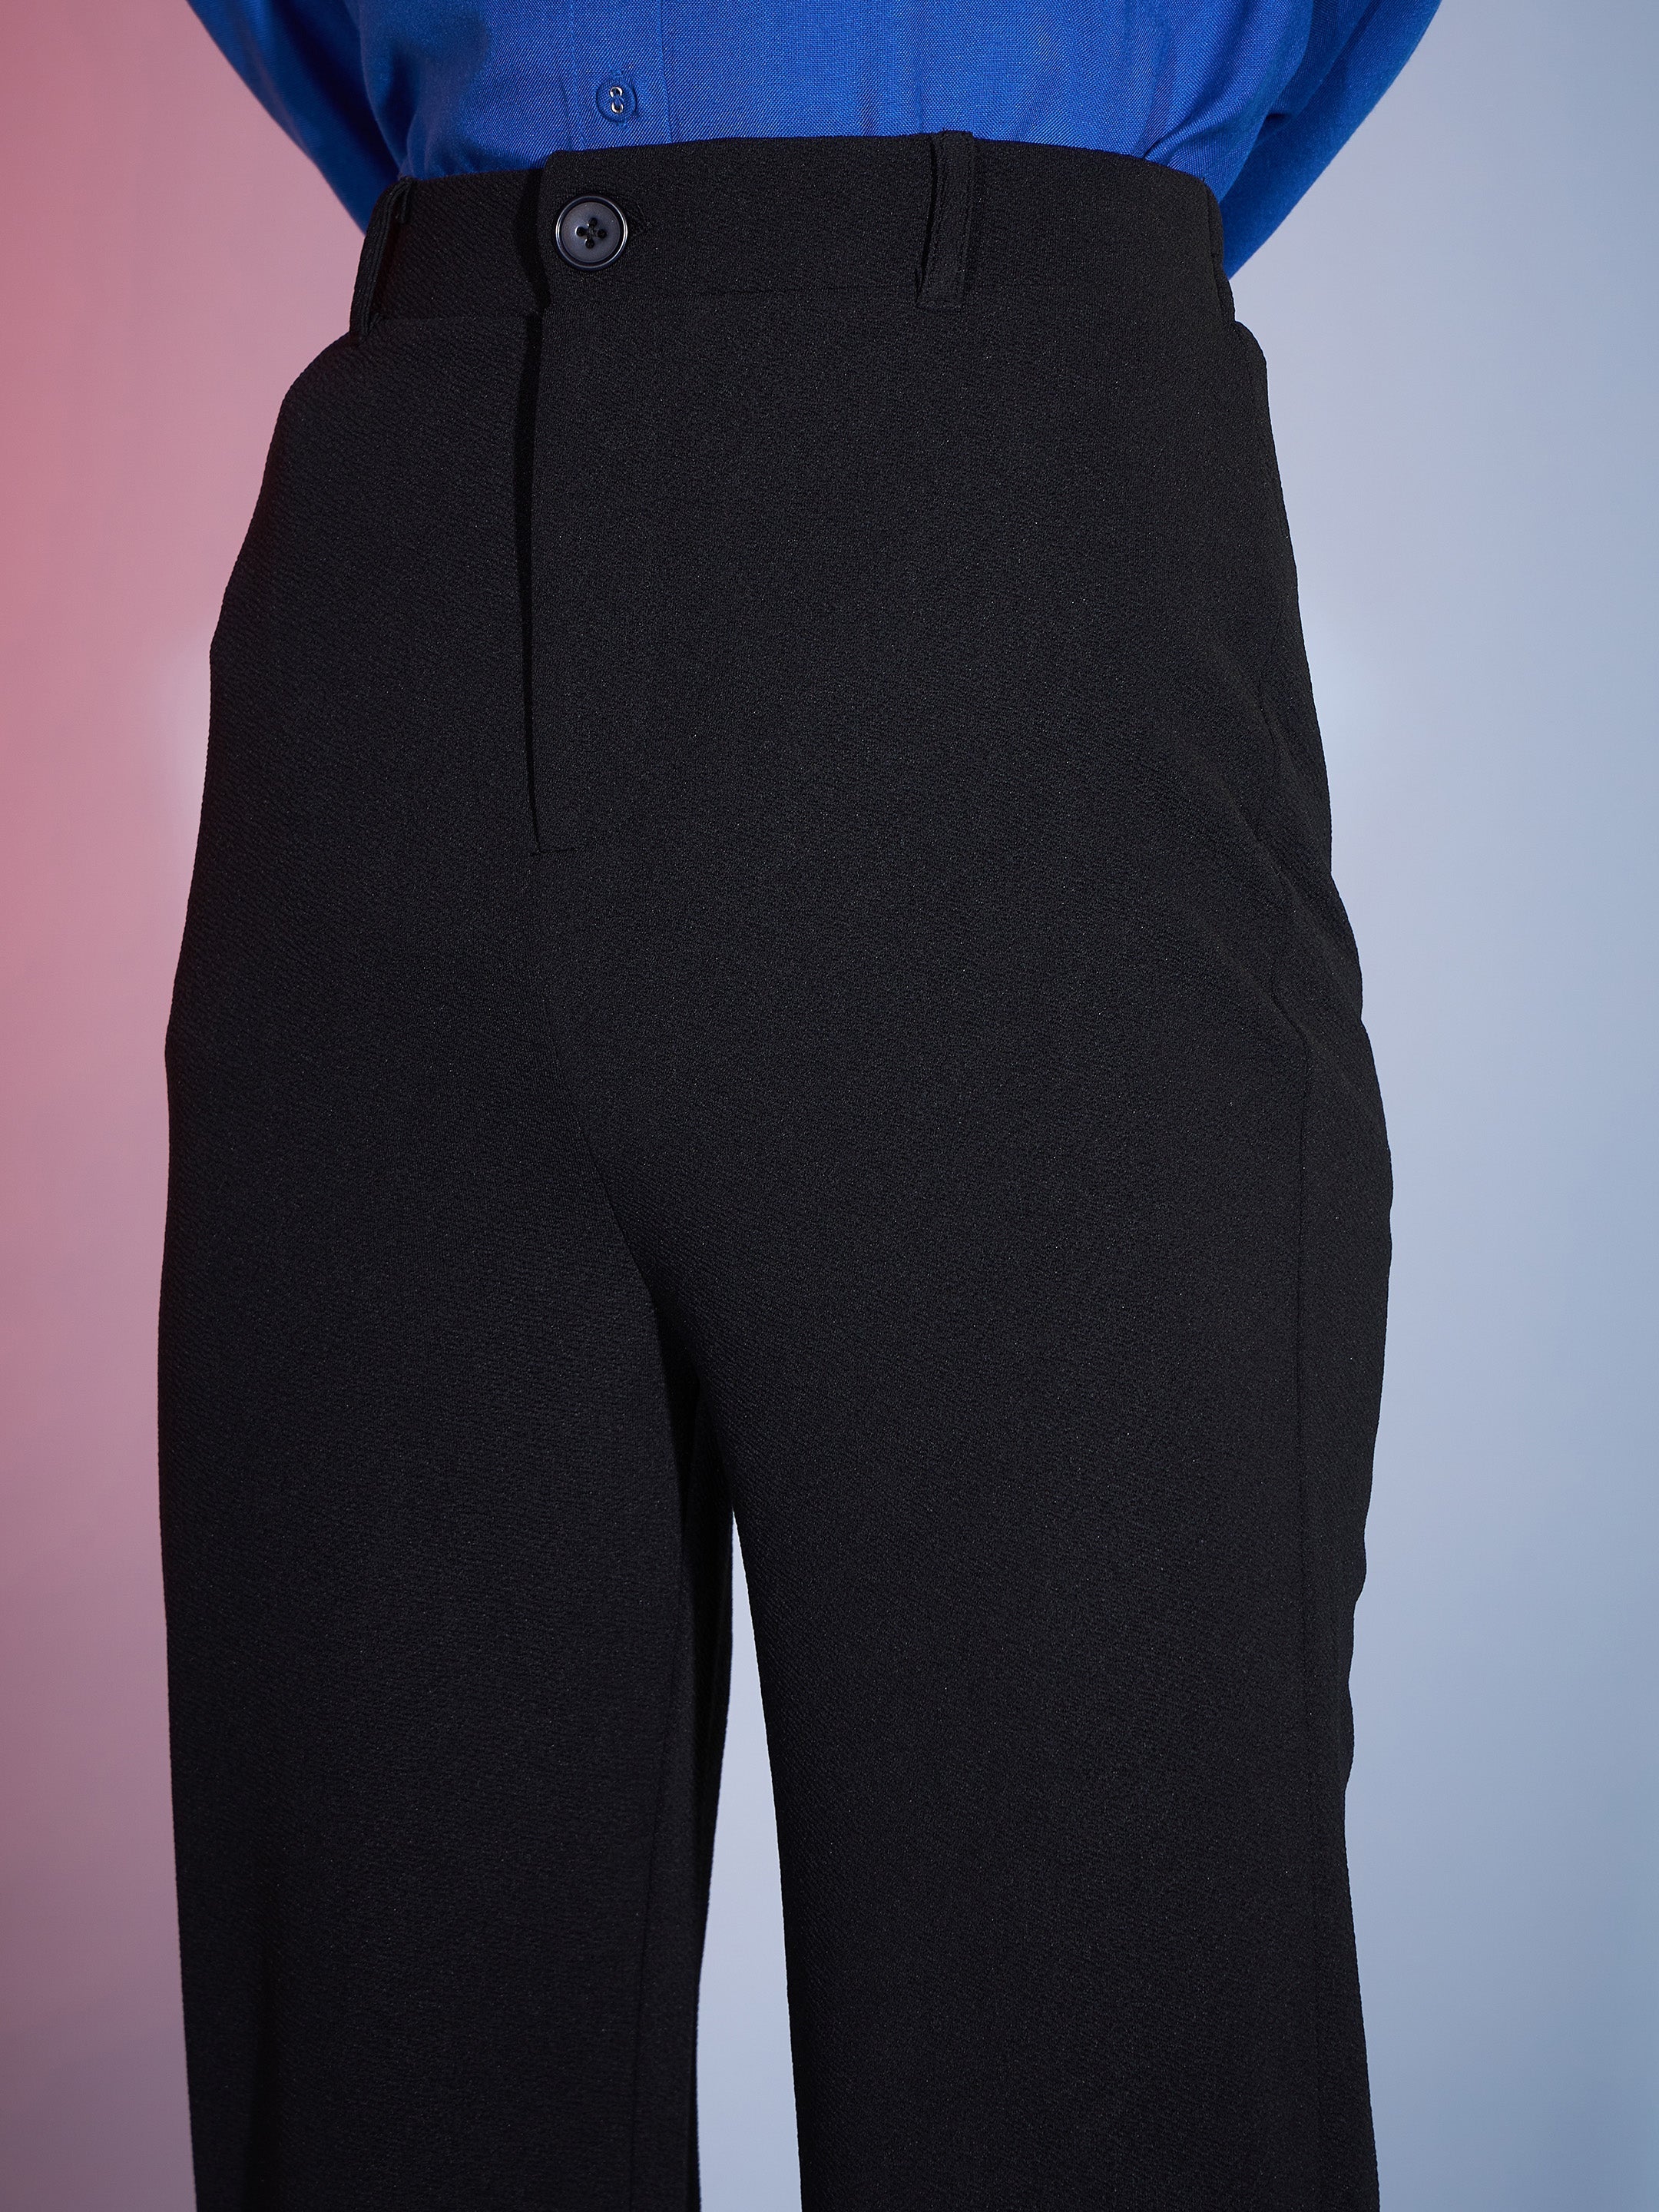 Women's Black Bell Bottom Kick Pleats Knitted Pants - SASSAFRAS